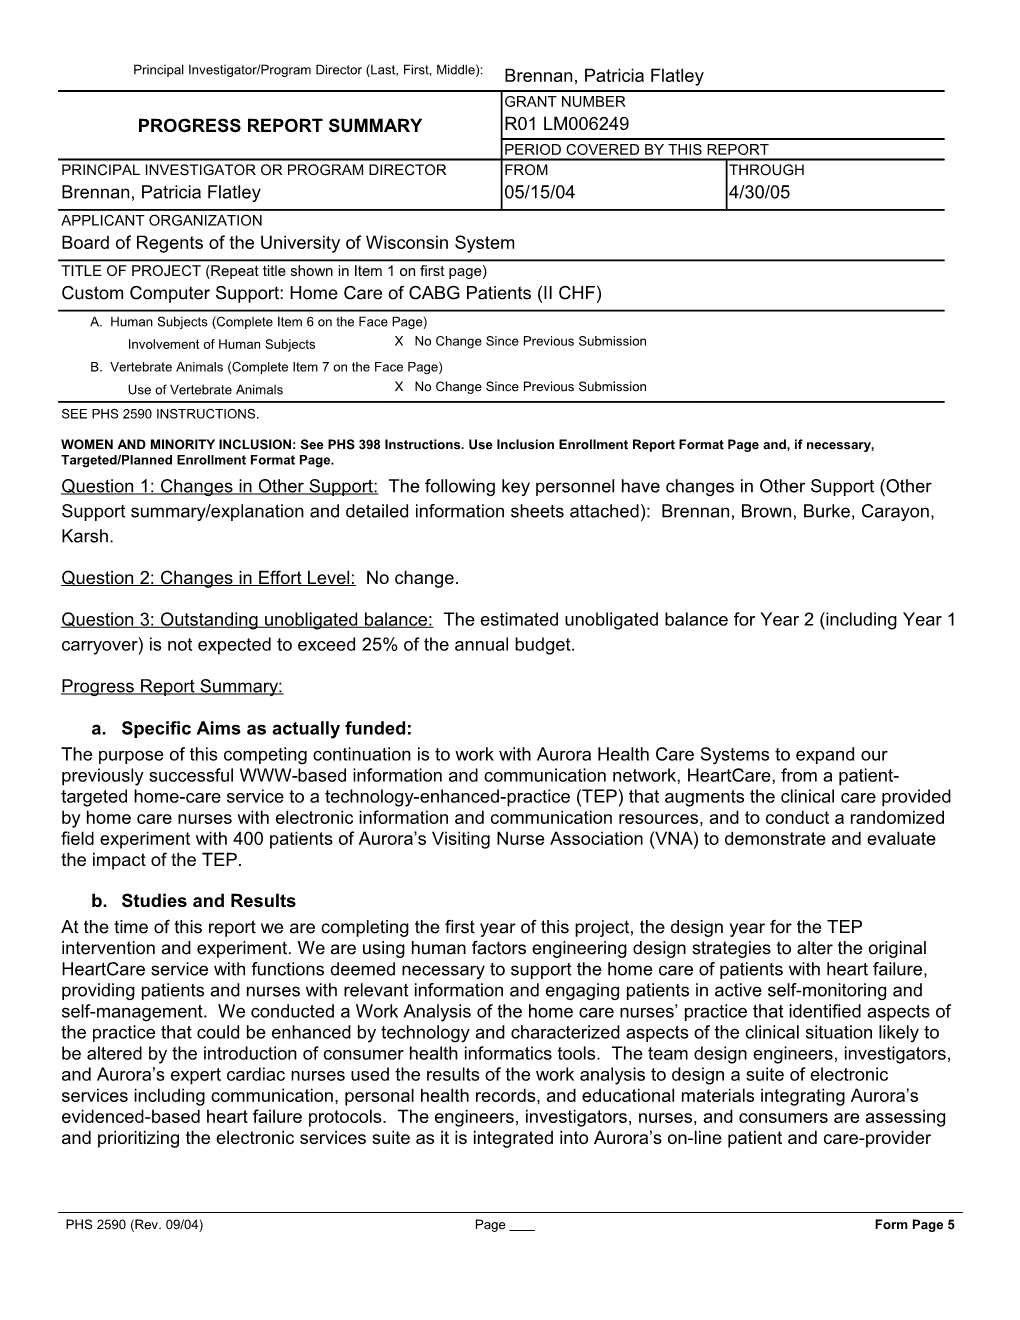 PHS 2590 (Rev. 9/04), Progress Report Summary, Form Page 5